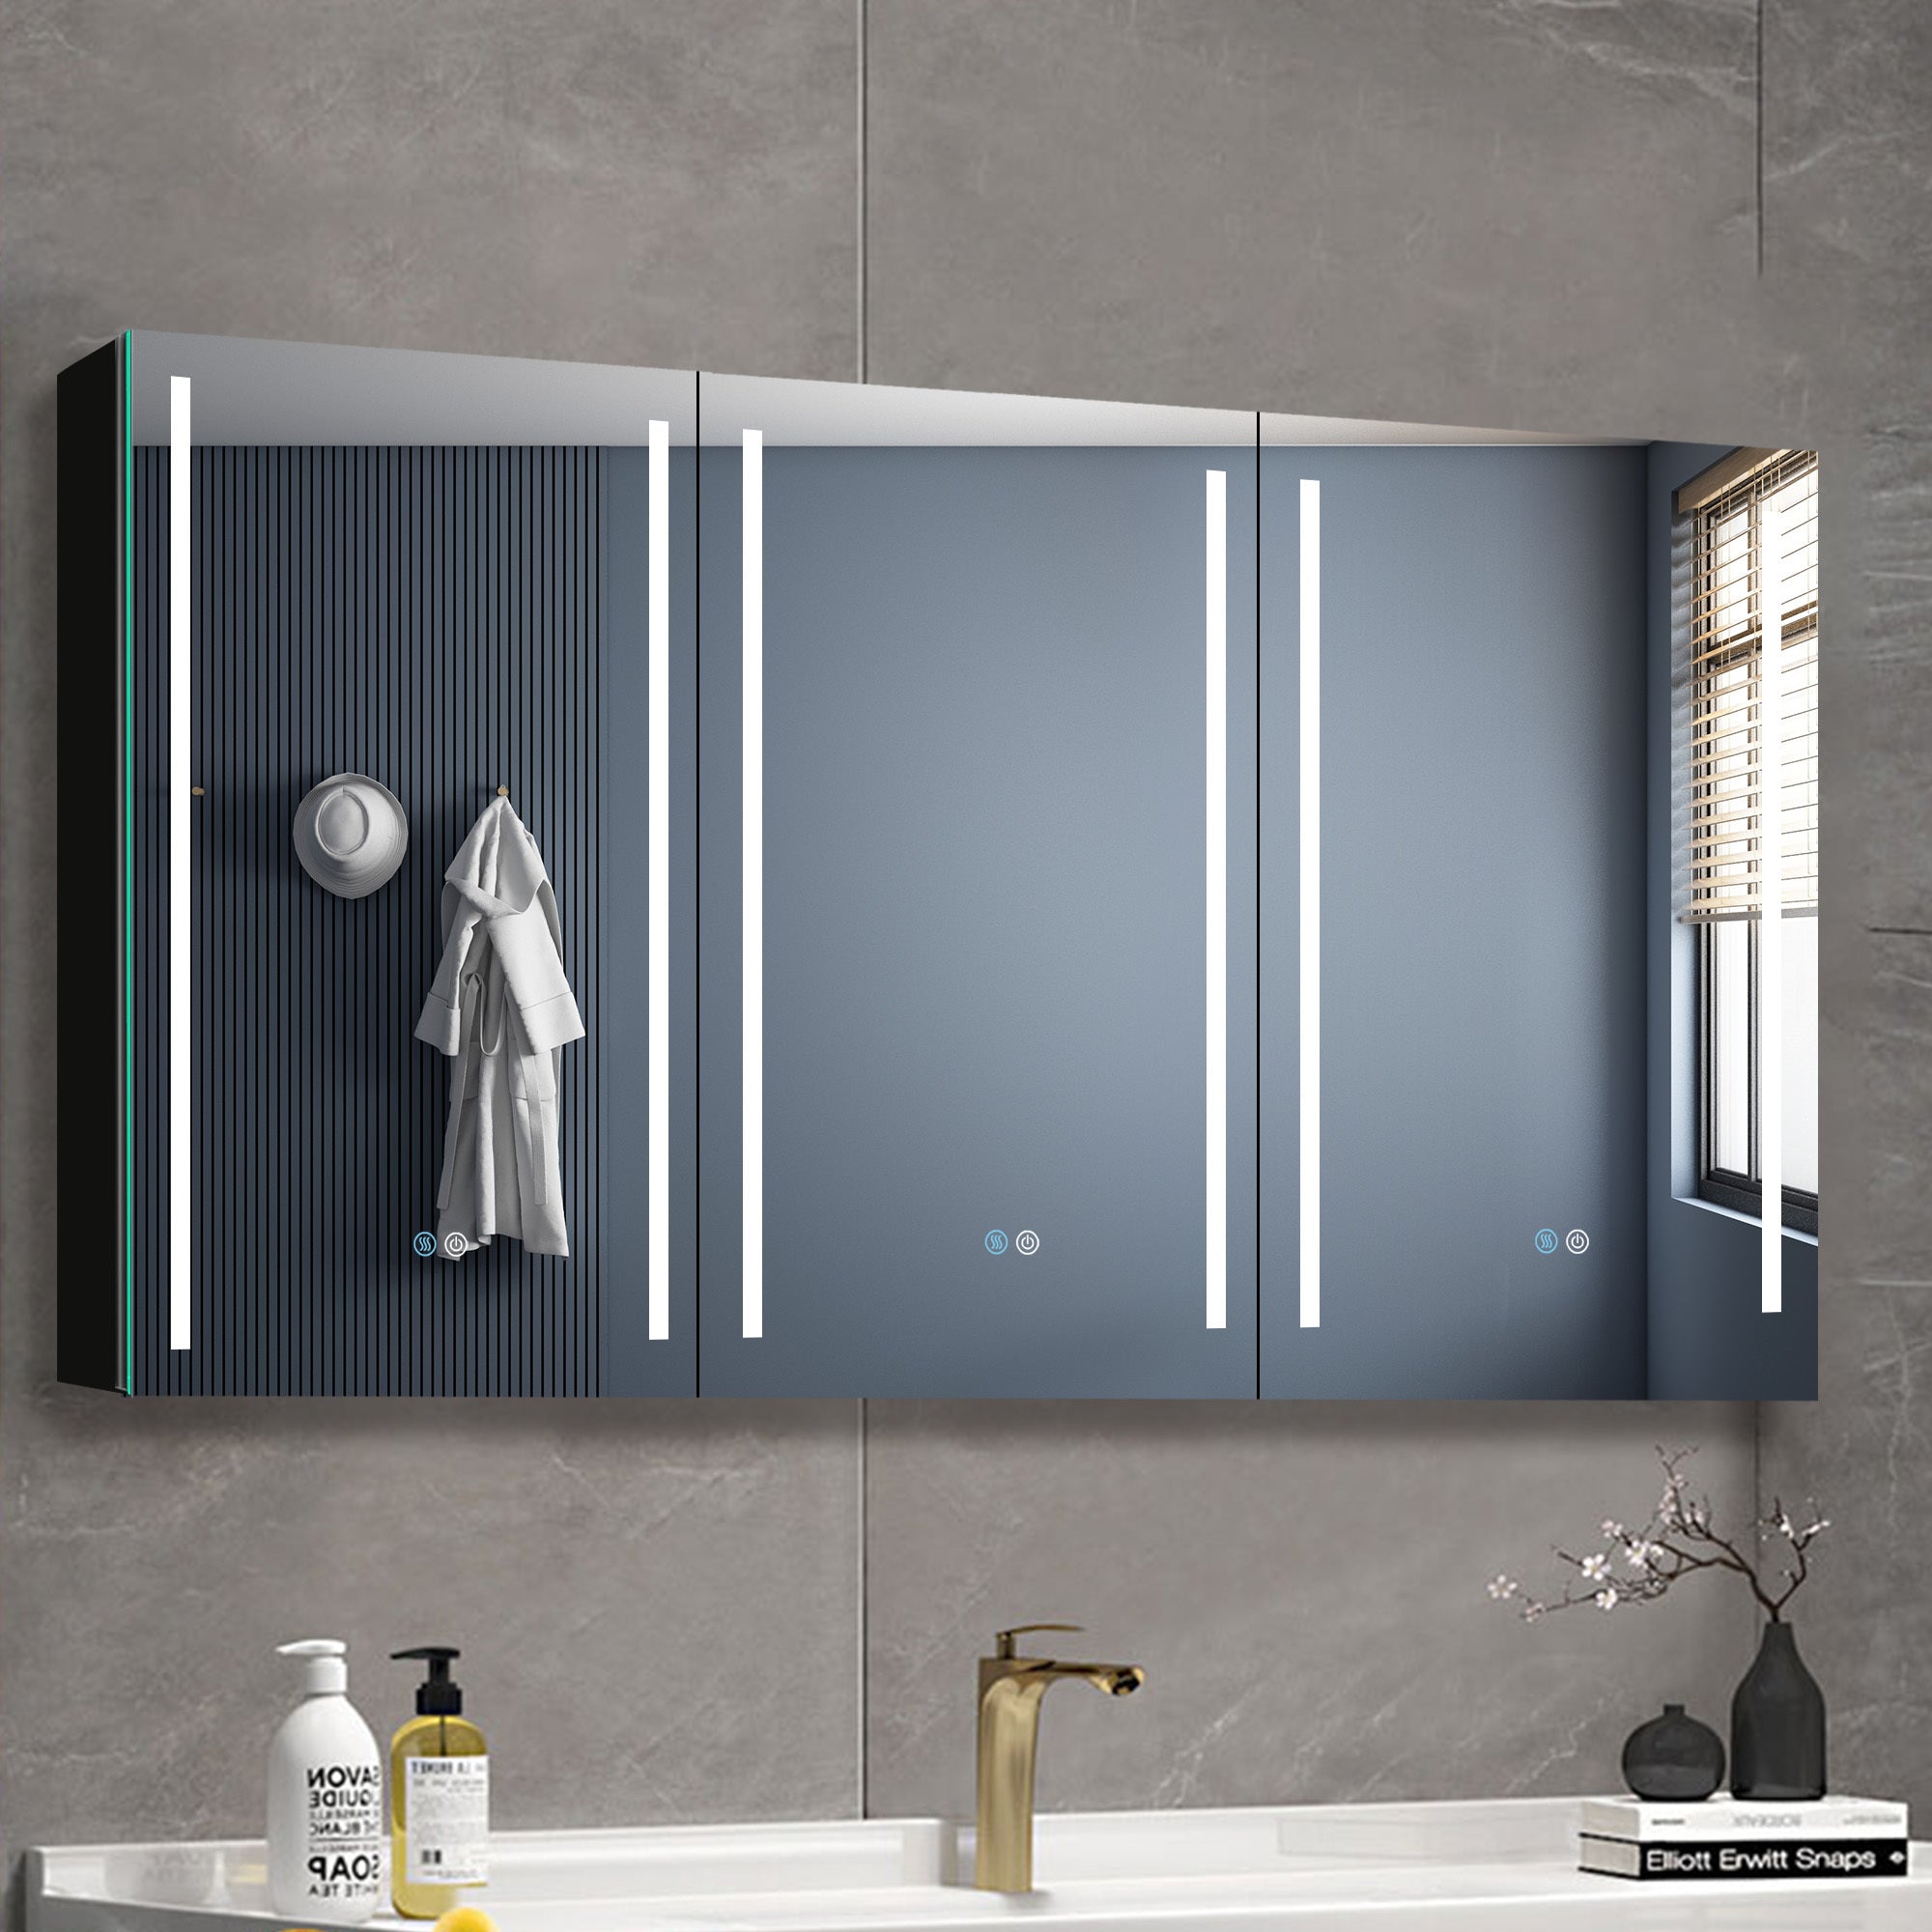 60x30 Inch LED Bathroom Medicine Cabinet Surface Mount black-aluminium